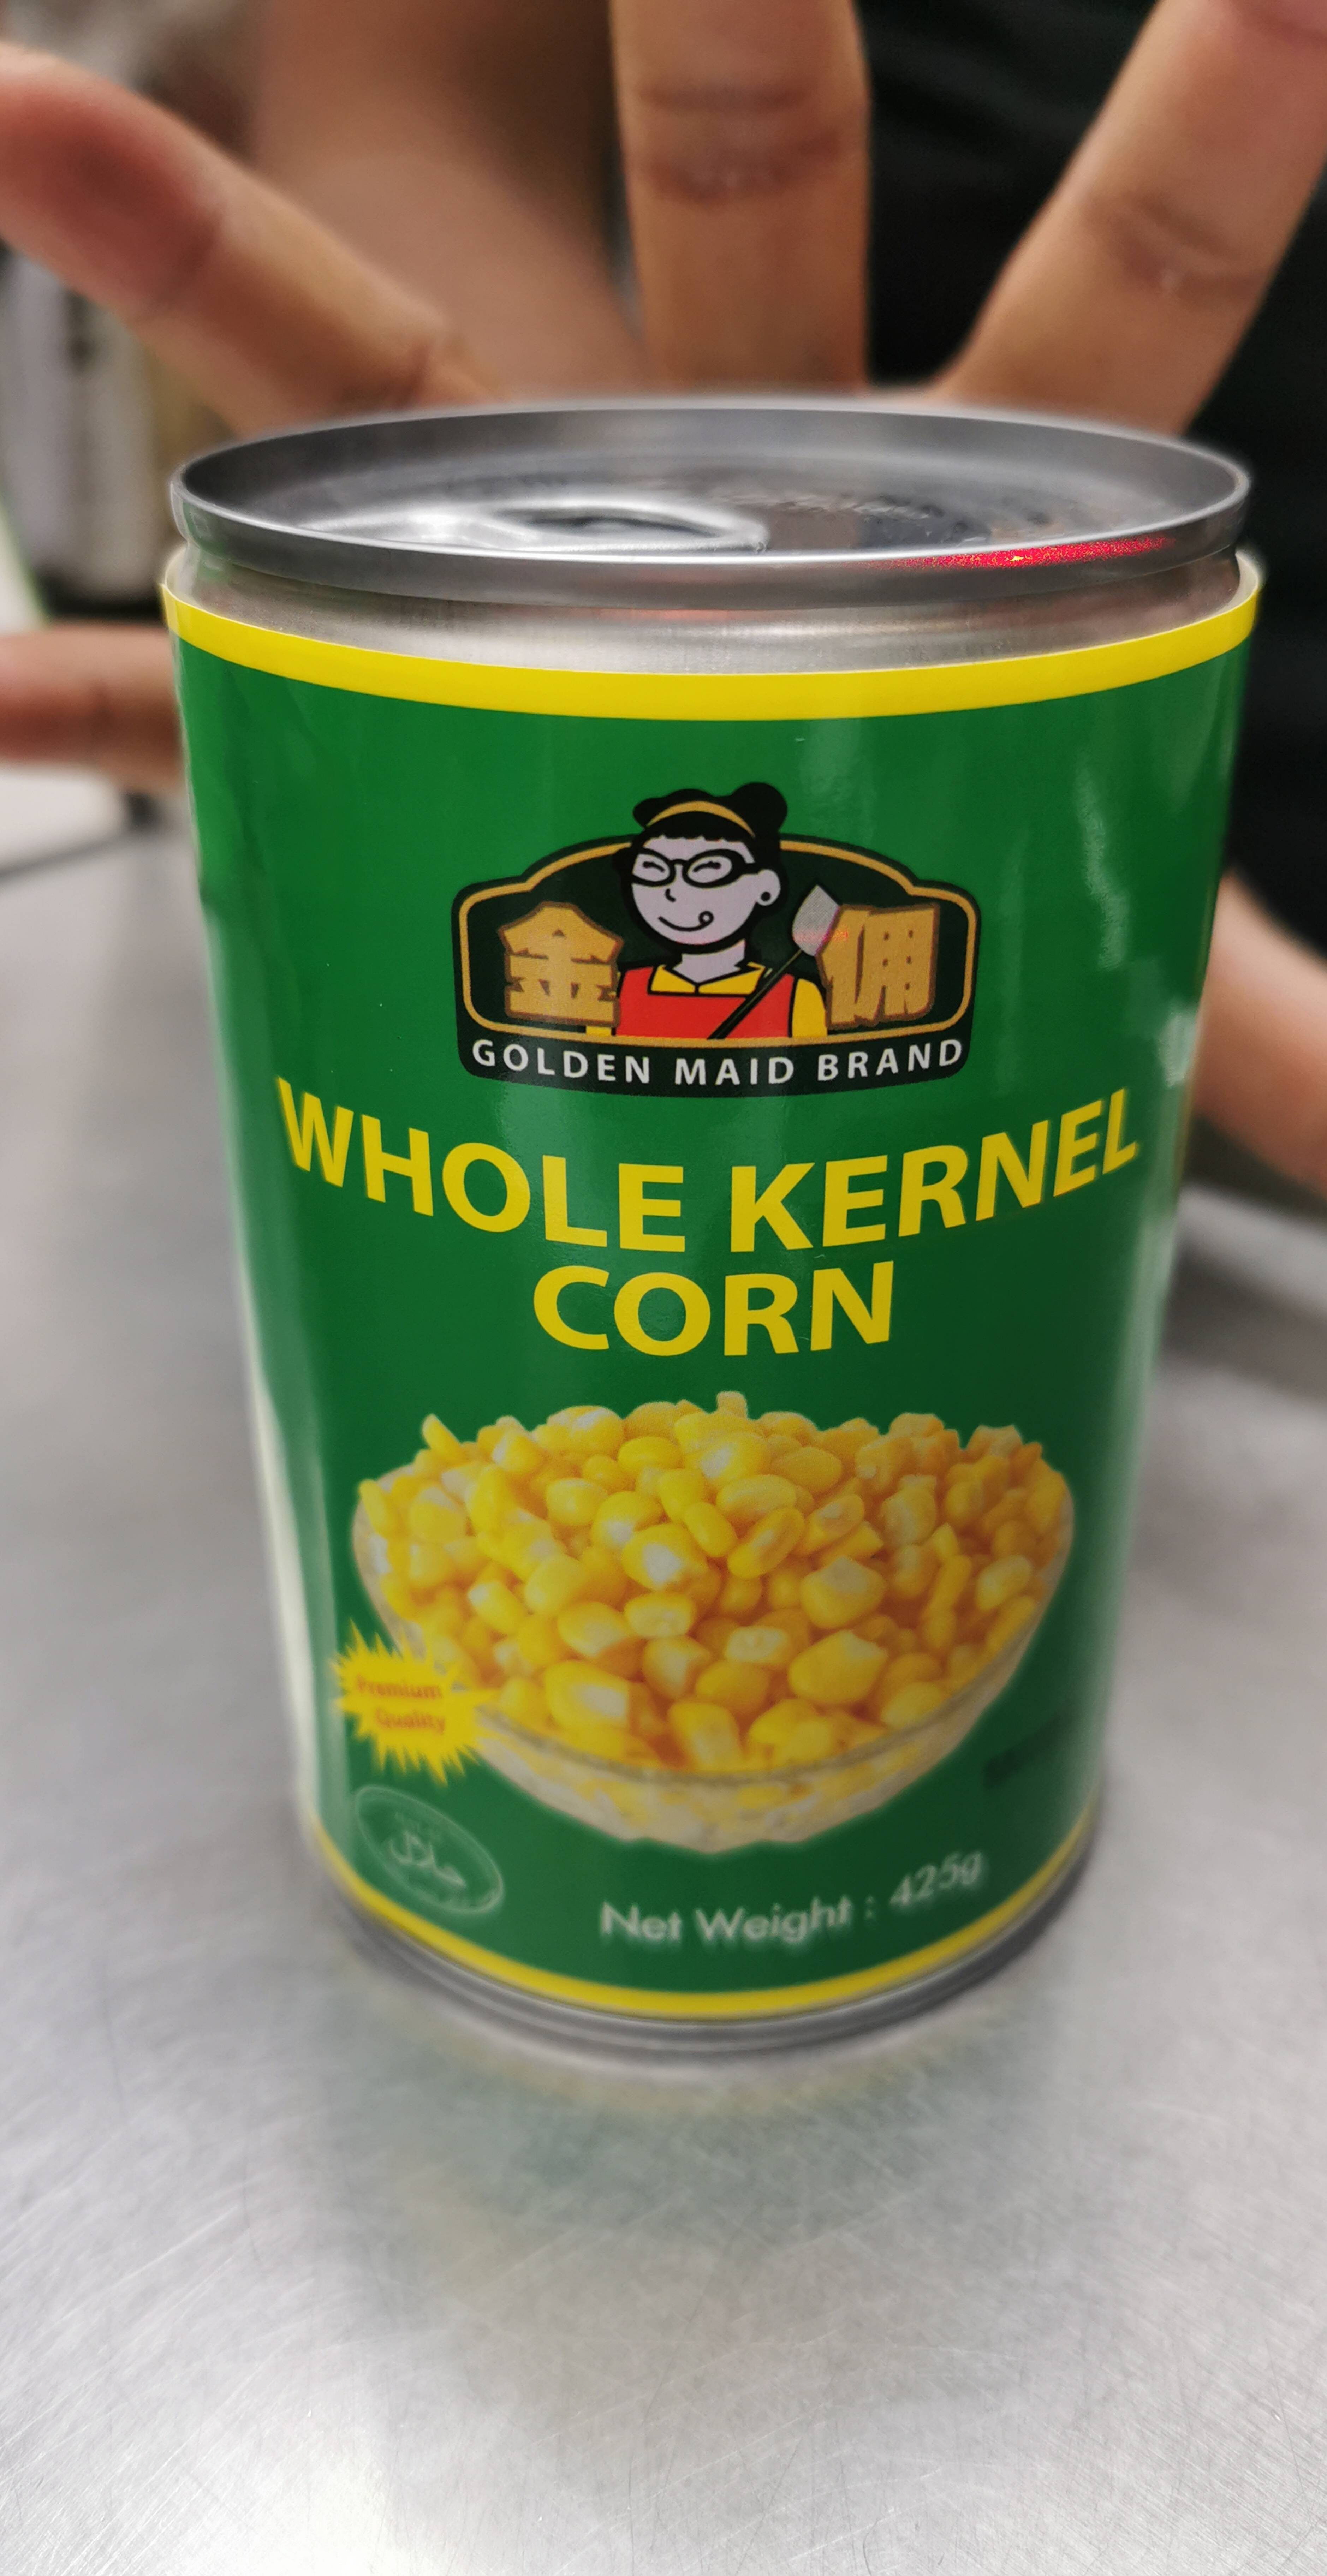 Whole kernel corn 425g - Product